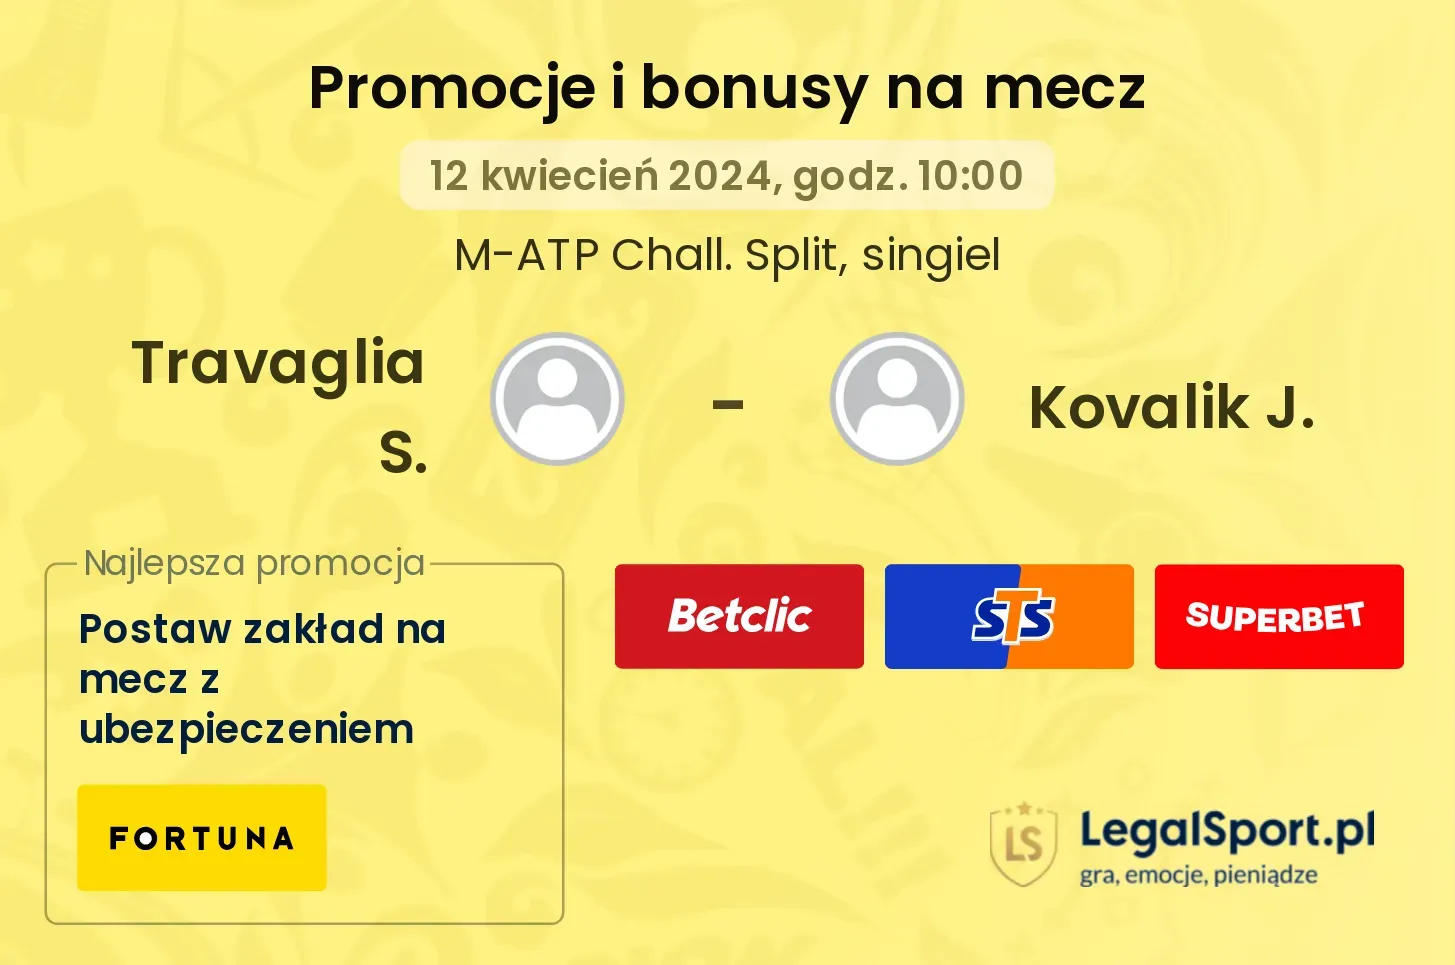 Travaglia S. - Kovalik J. promocje bonusy na mecz